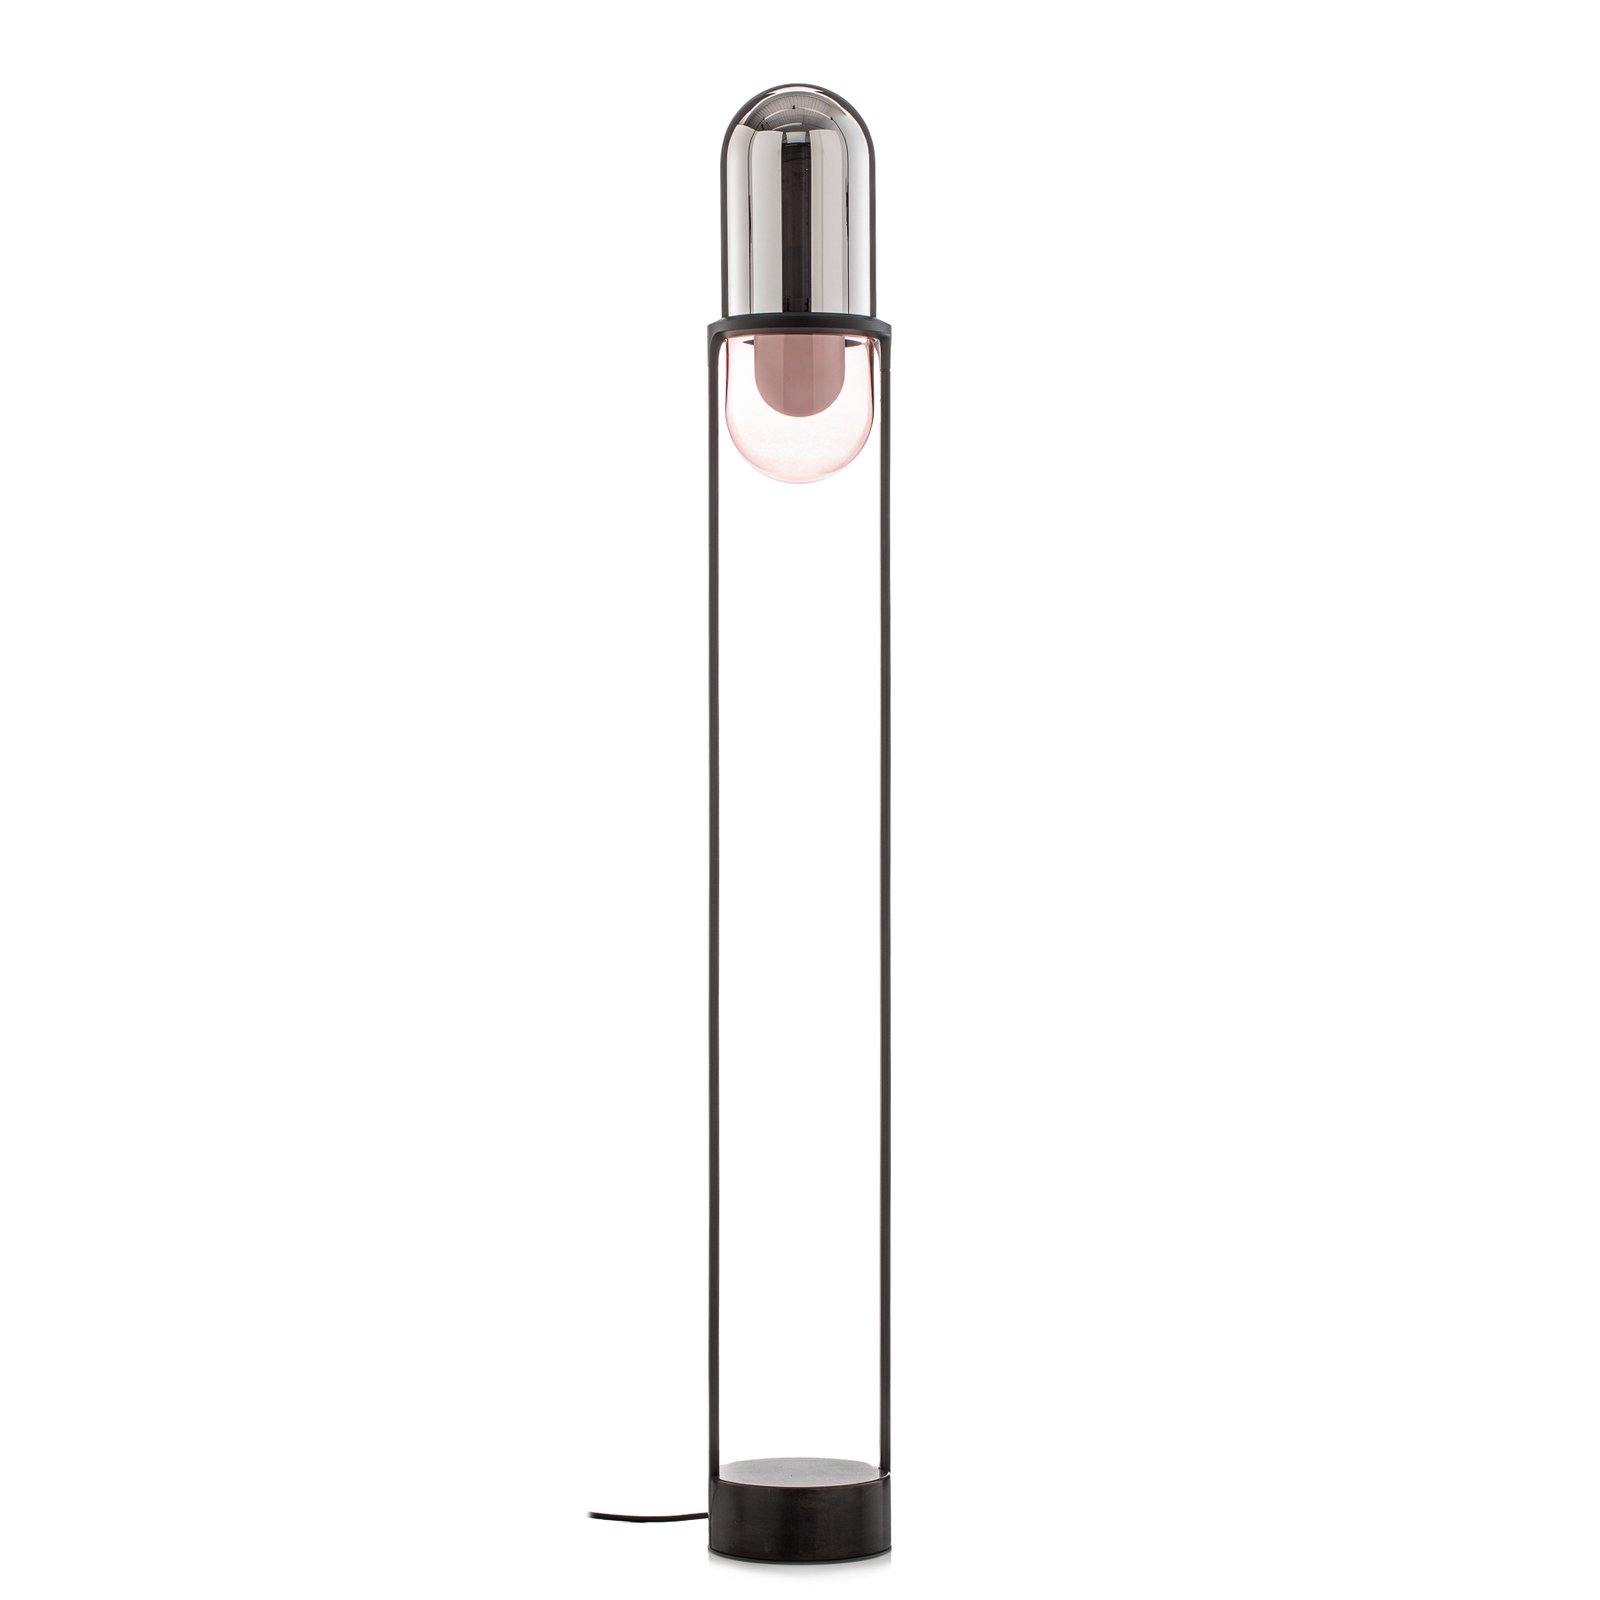 Pille LED vloerlamp grijs/roze